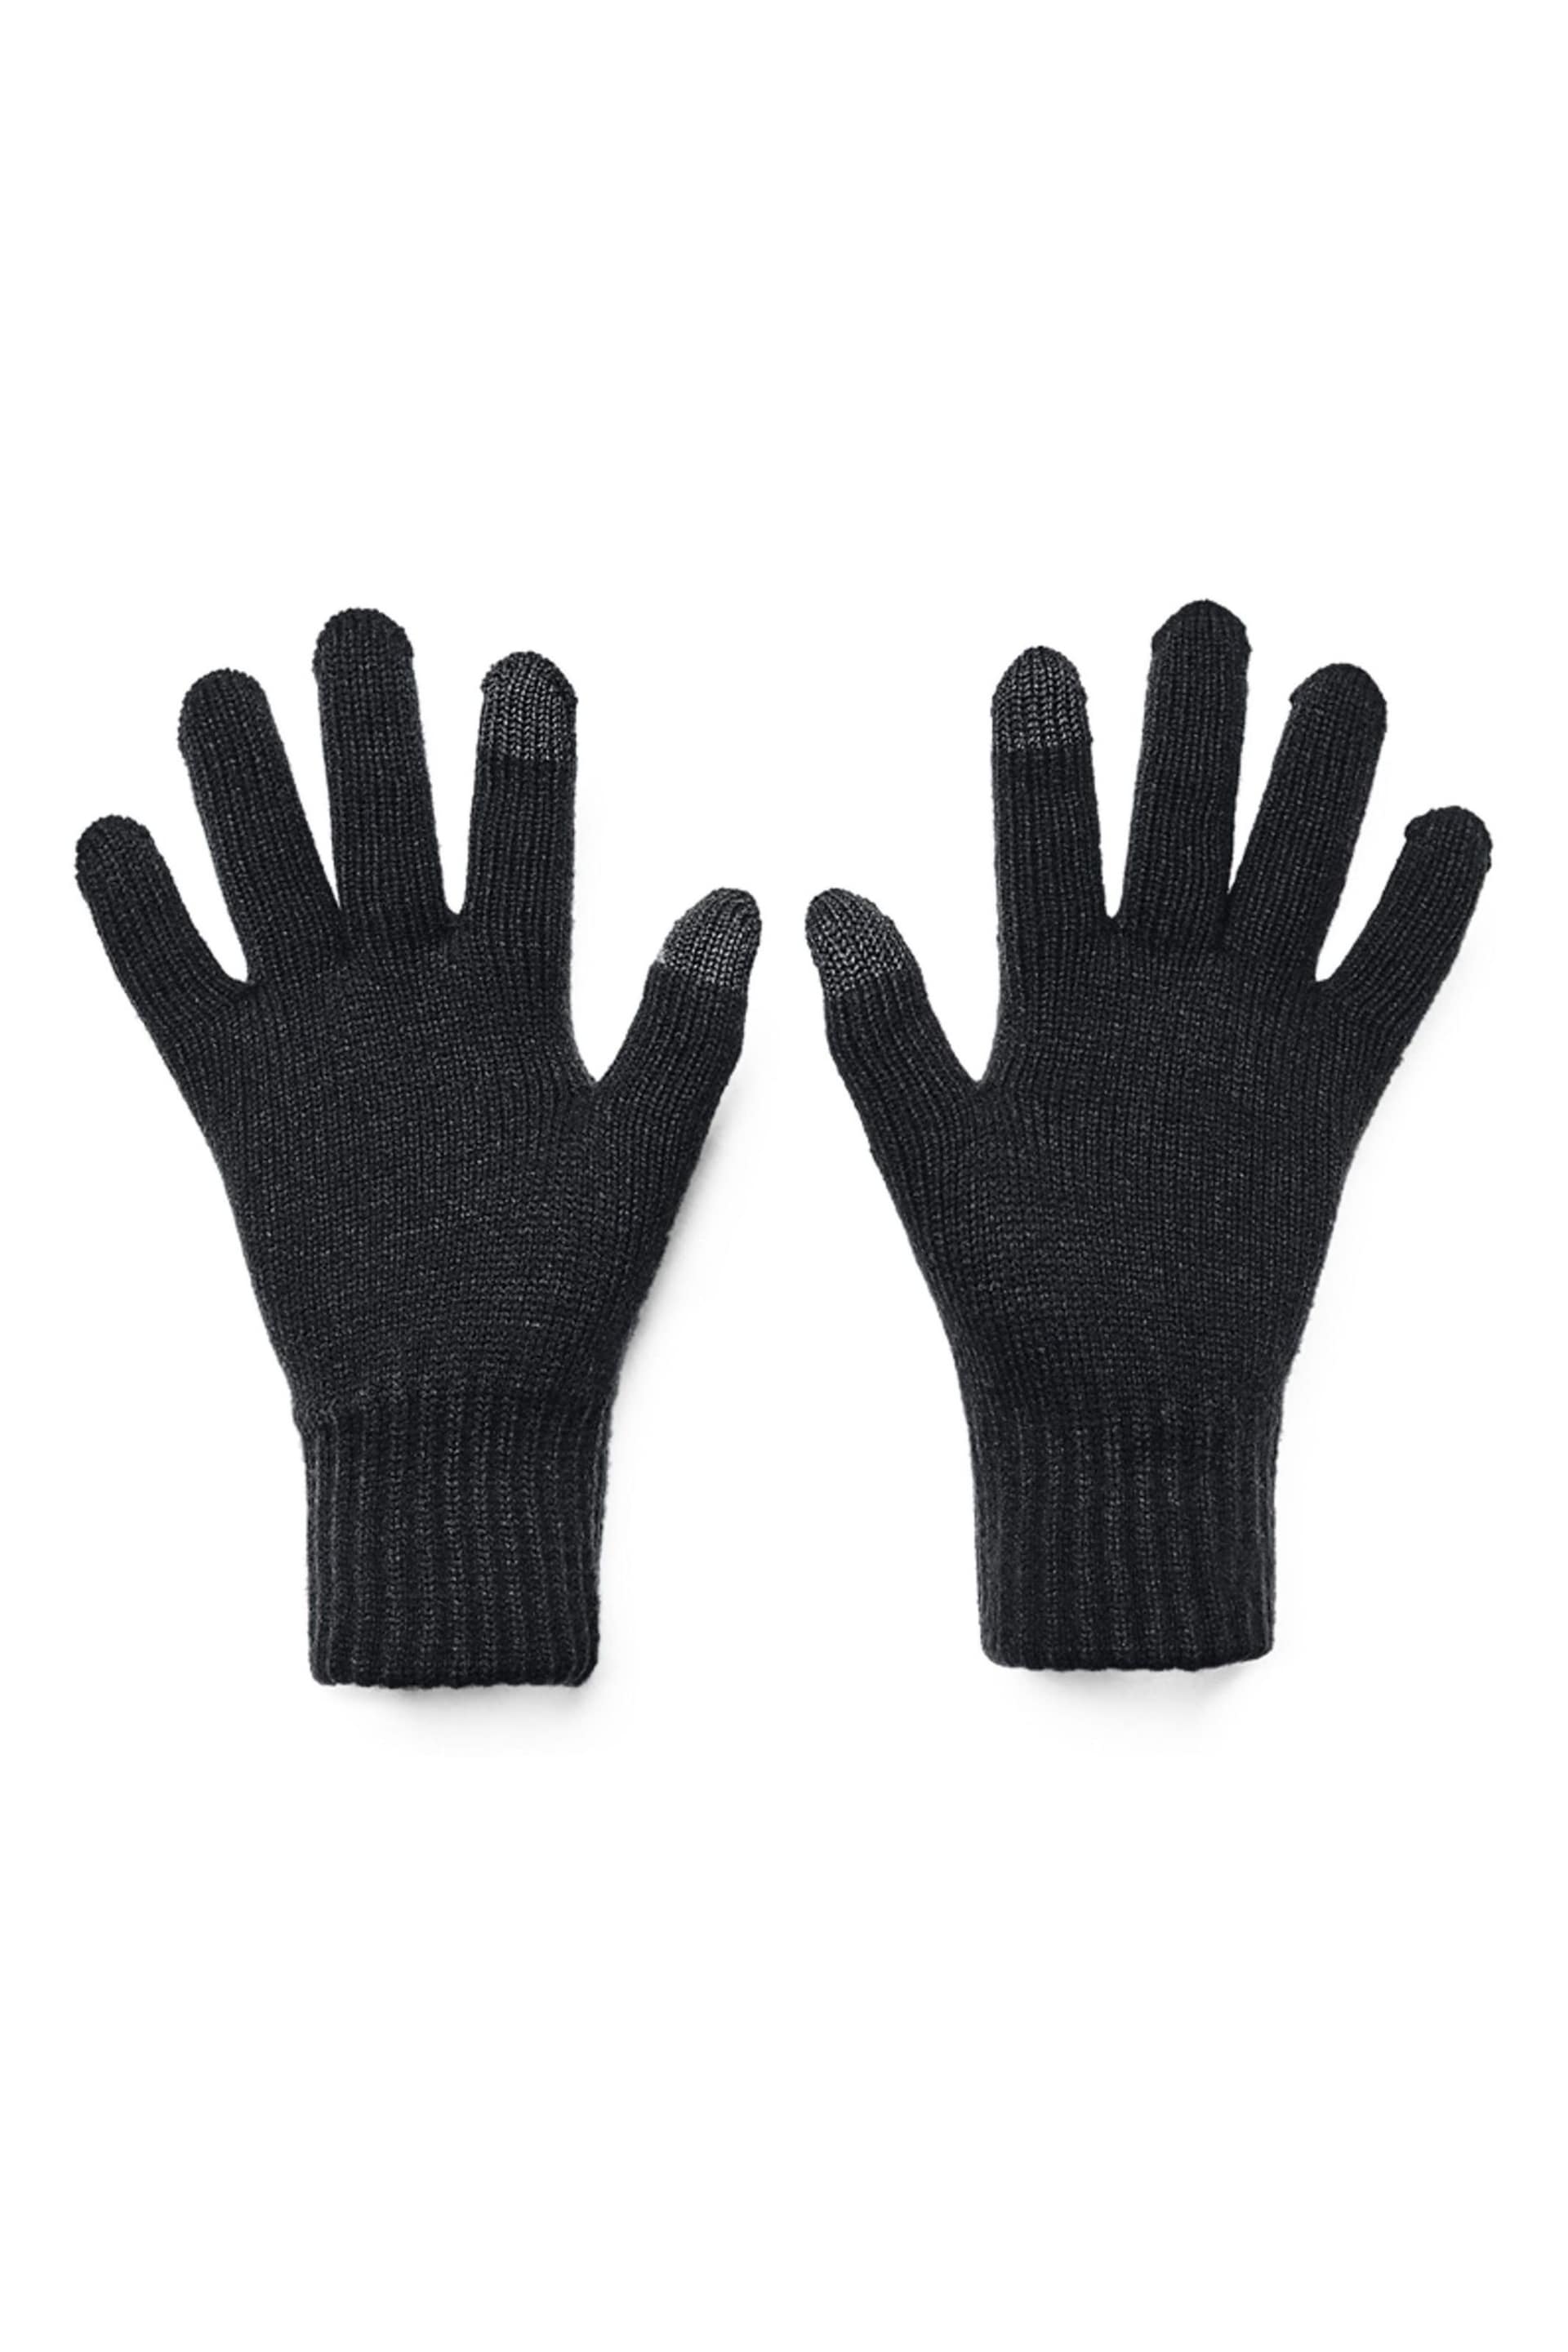 Under Armour Black Halftime Gloves - Image 2 of 3